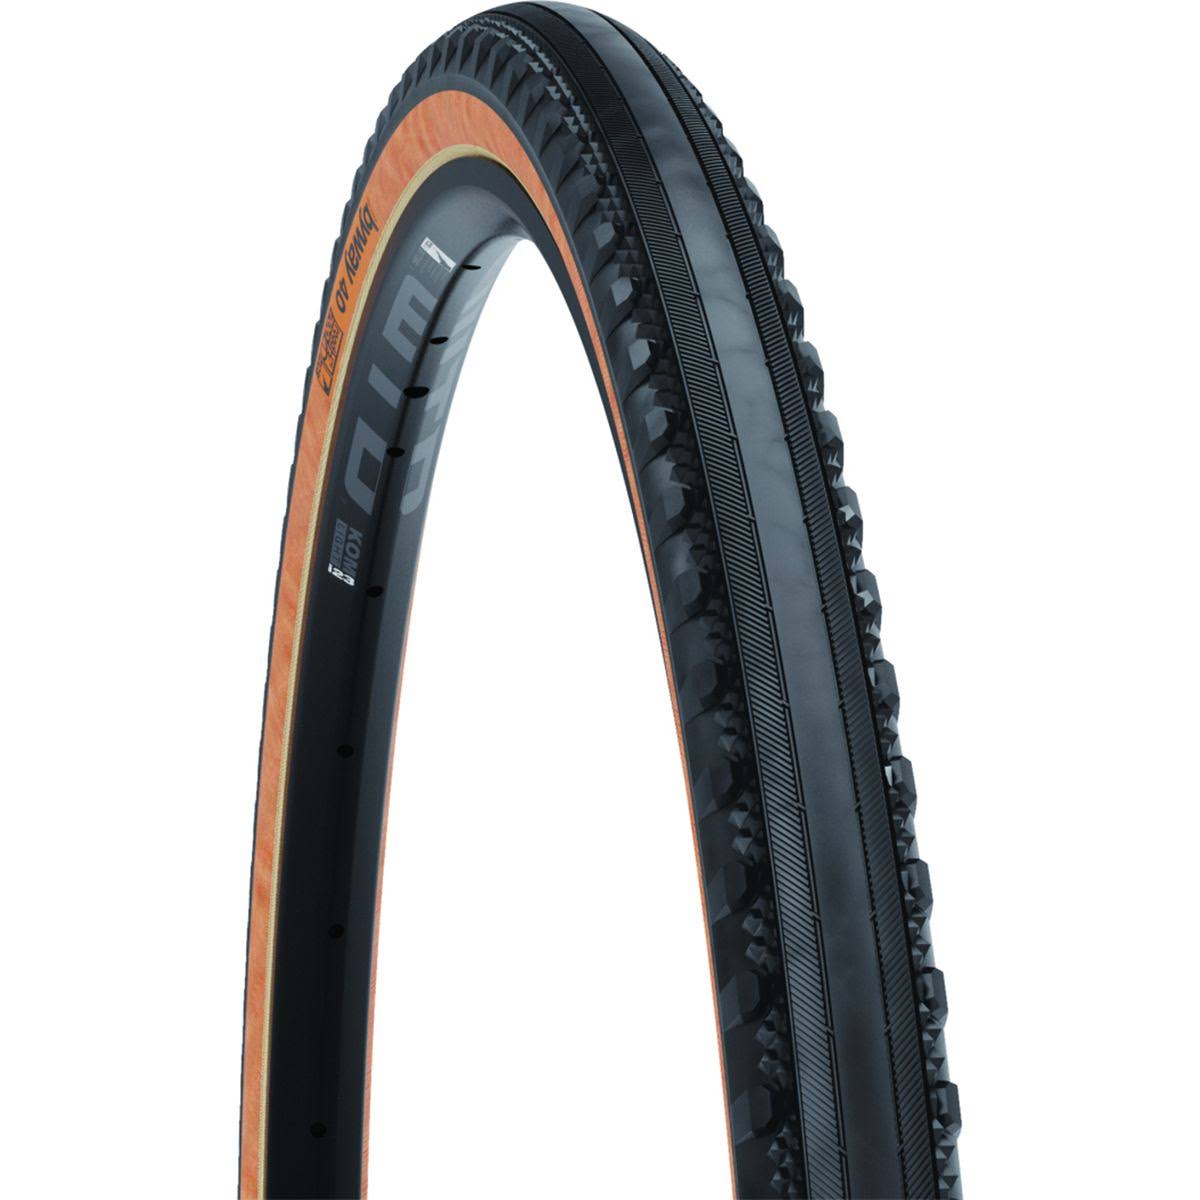 WTB Byway TCS Tubeless Folding Tire - Black/Tan, 700x40